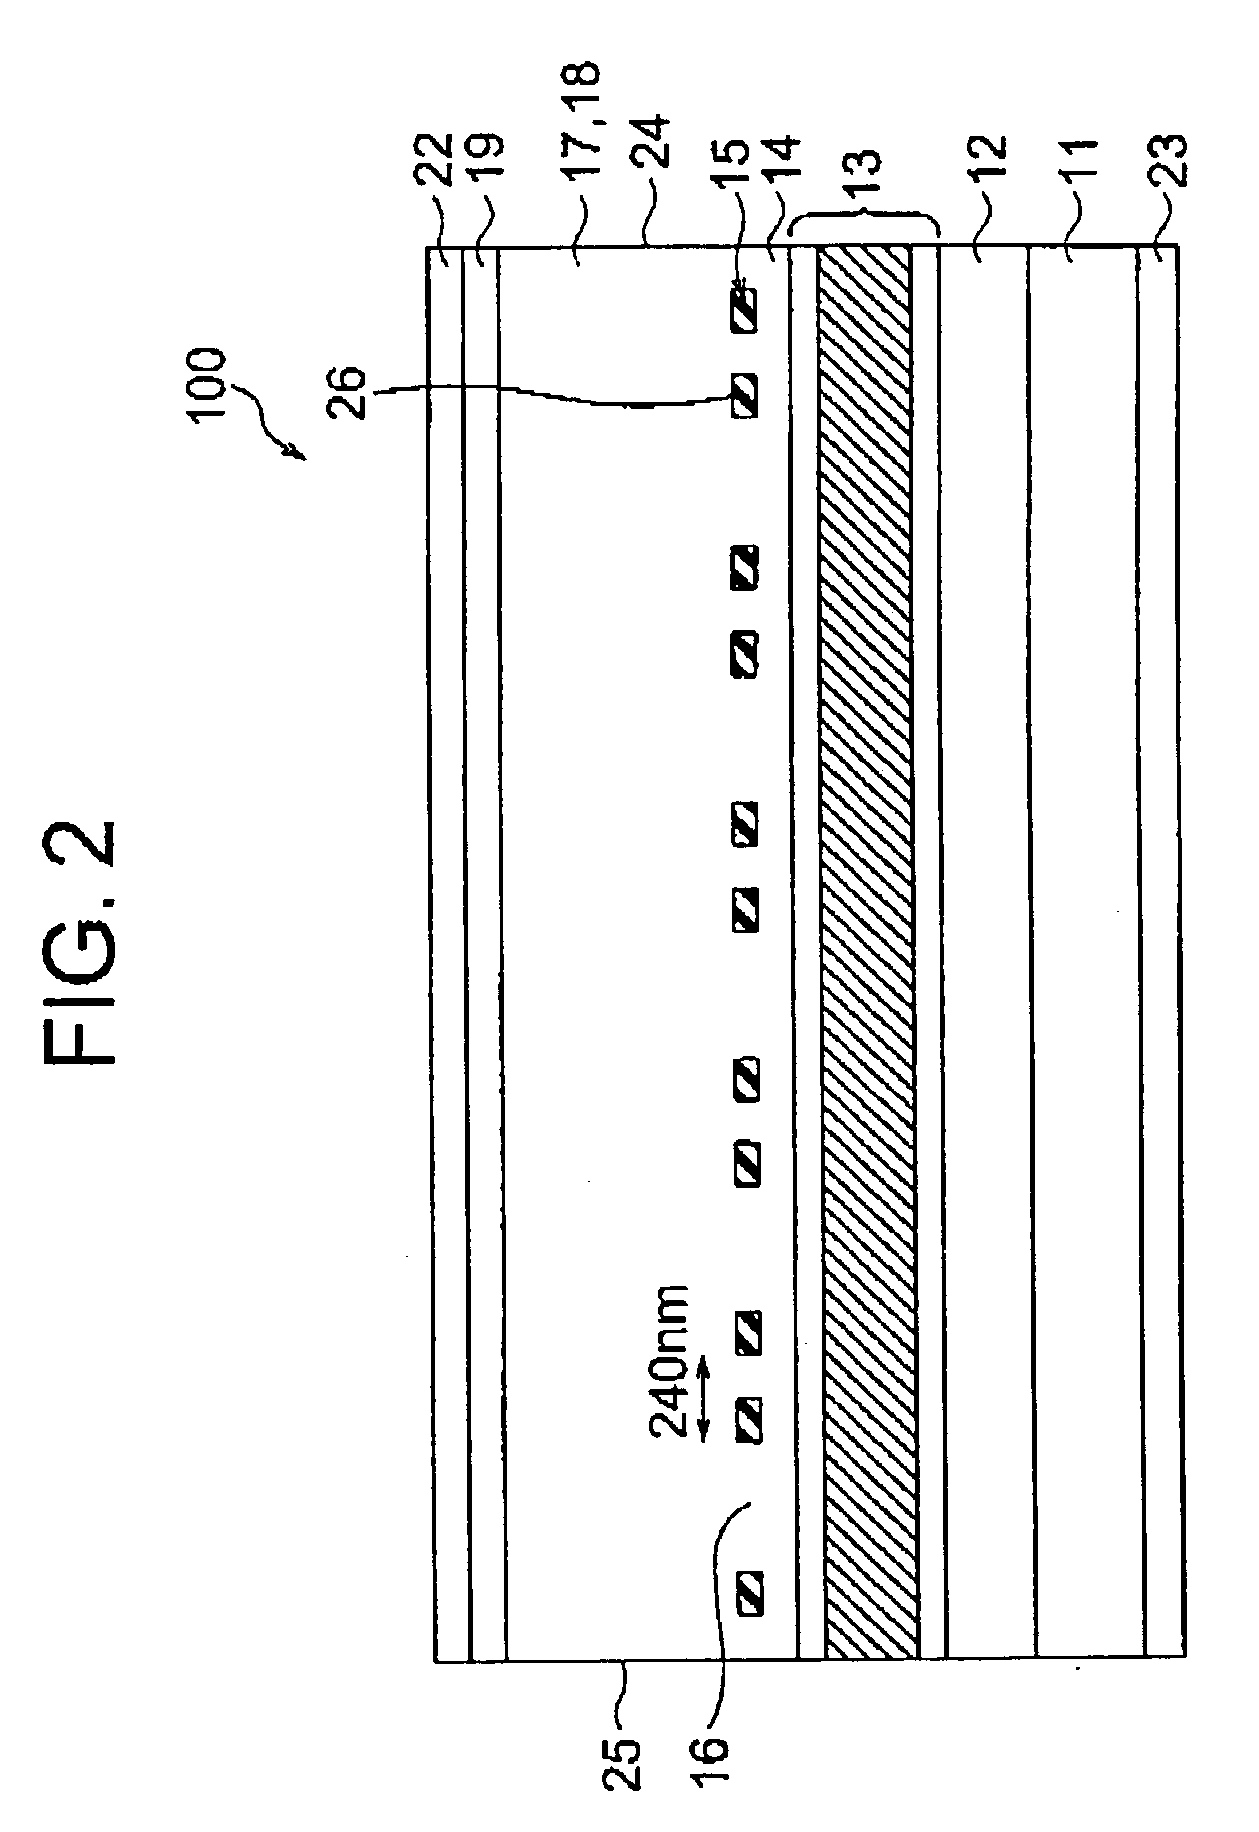 DFB semiconductor laser device having ununiform arrangement of a diffraction grating